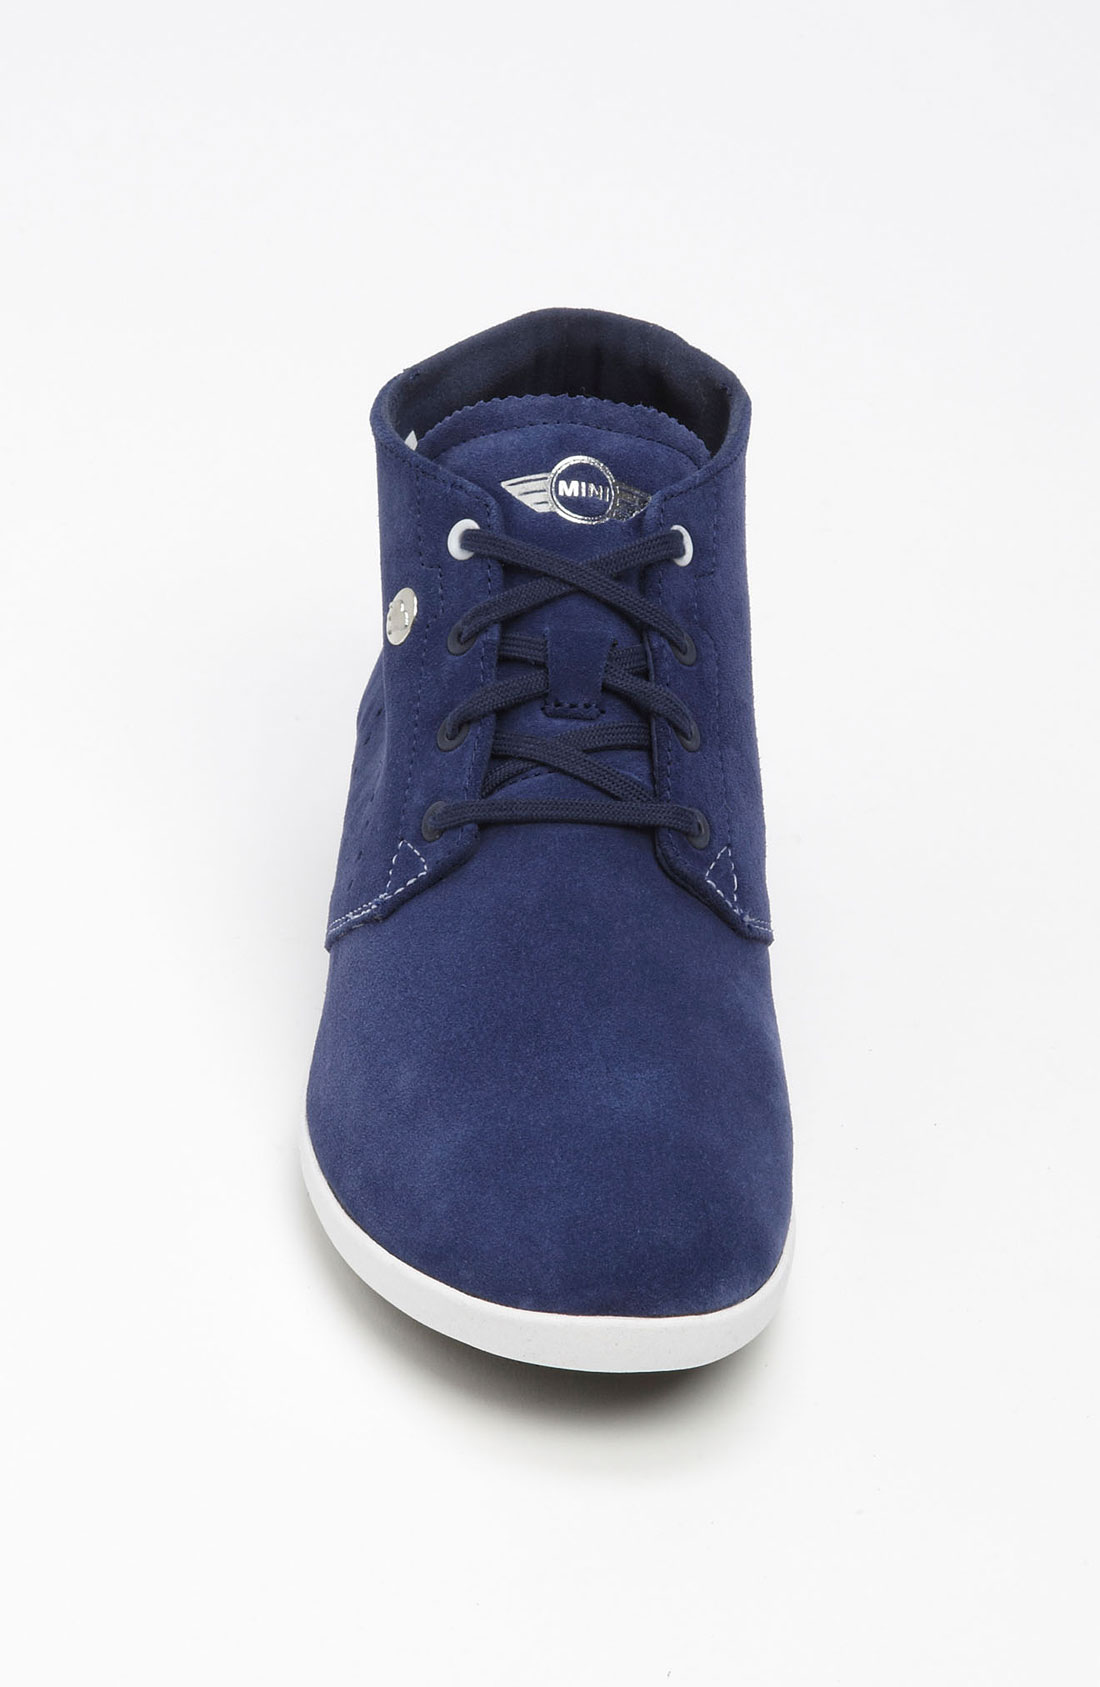 puma medieval blue & white lifestyle shoes